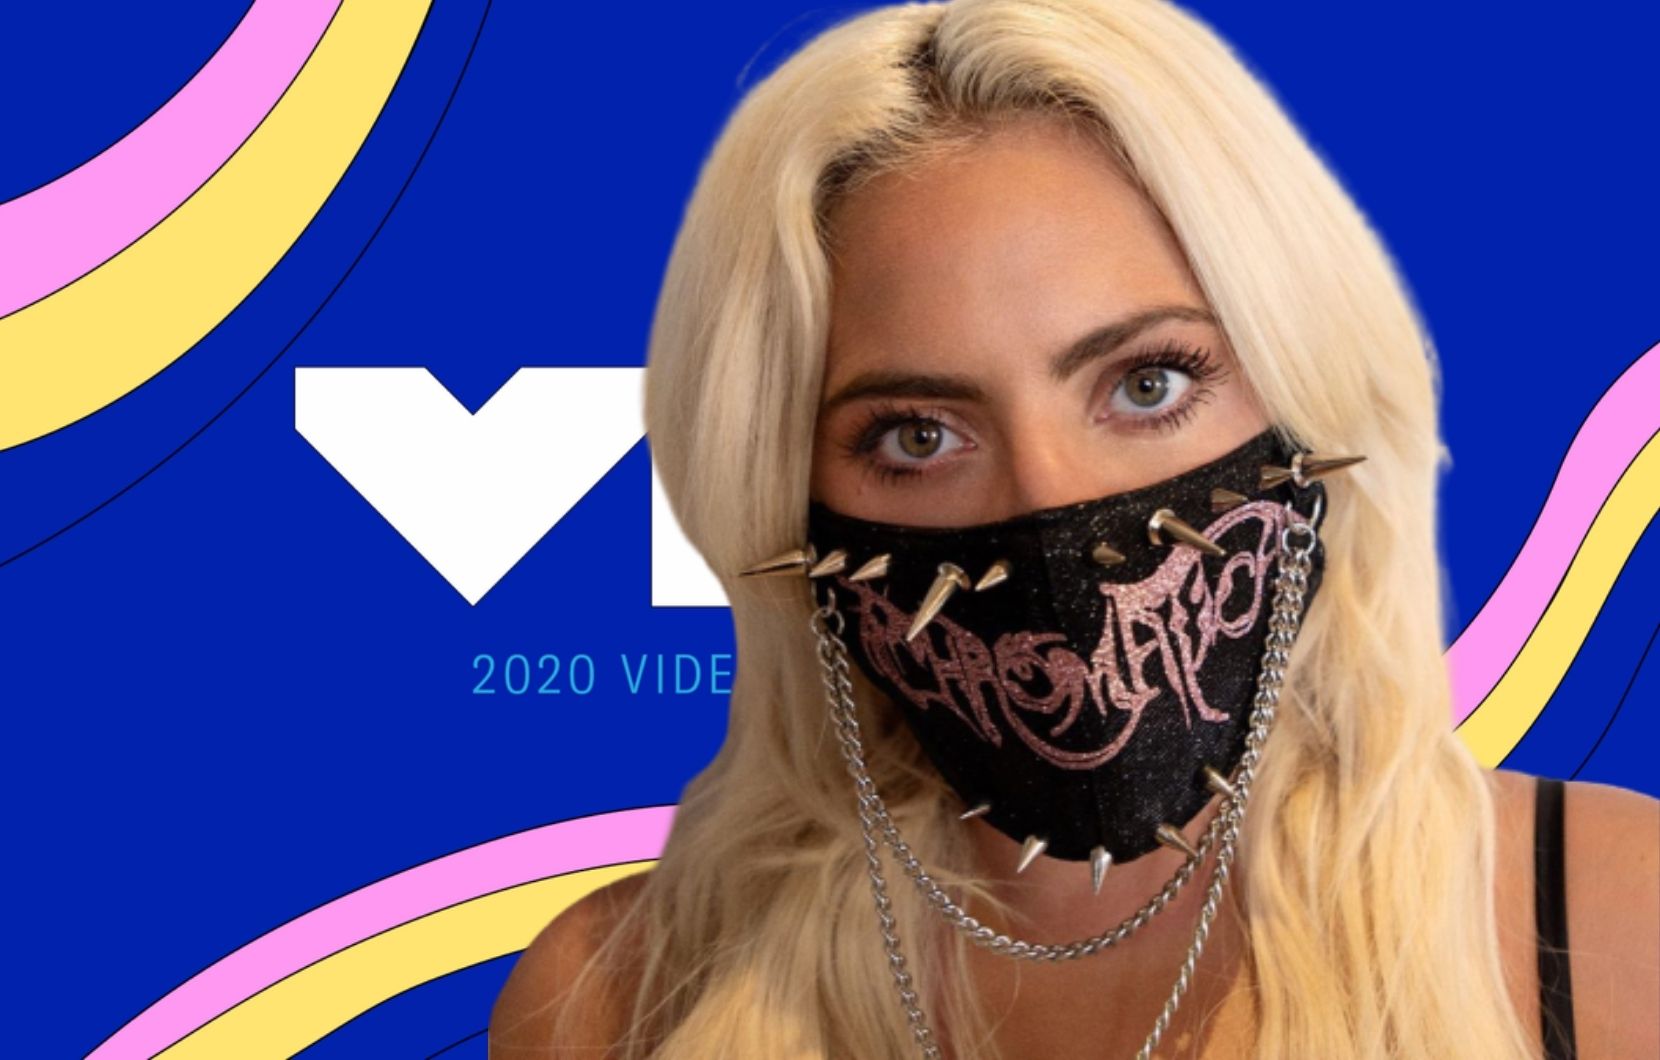 VMA 2020: Grande estrela da noite, Lady Gaga surpreende com máscaras fashionistas e visuais icônicos